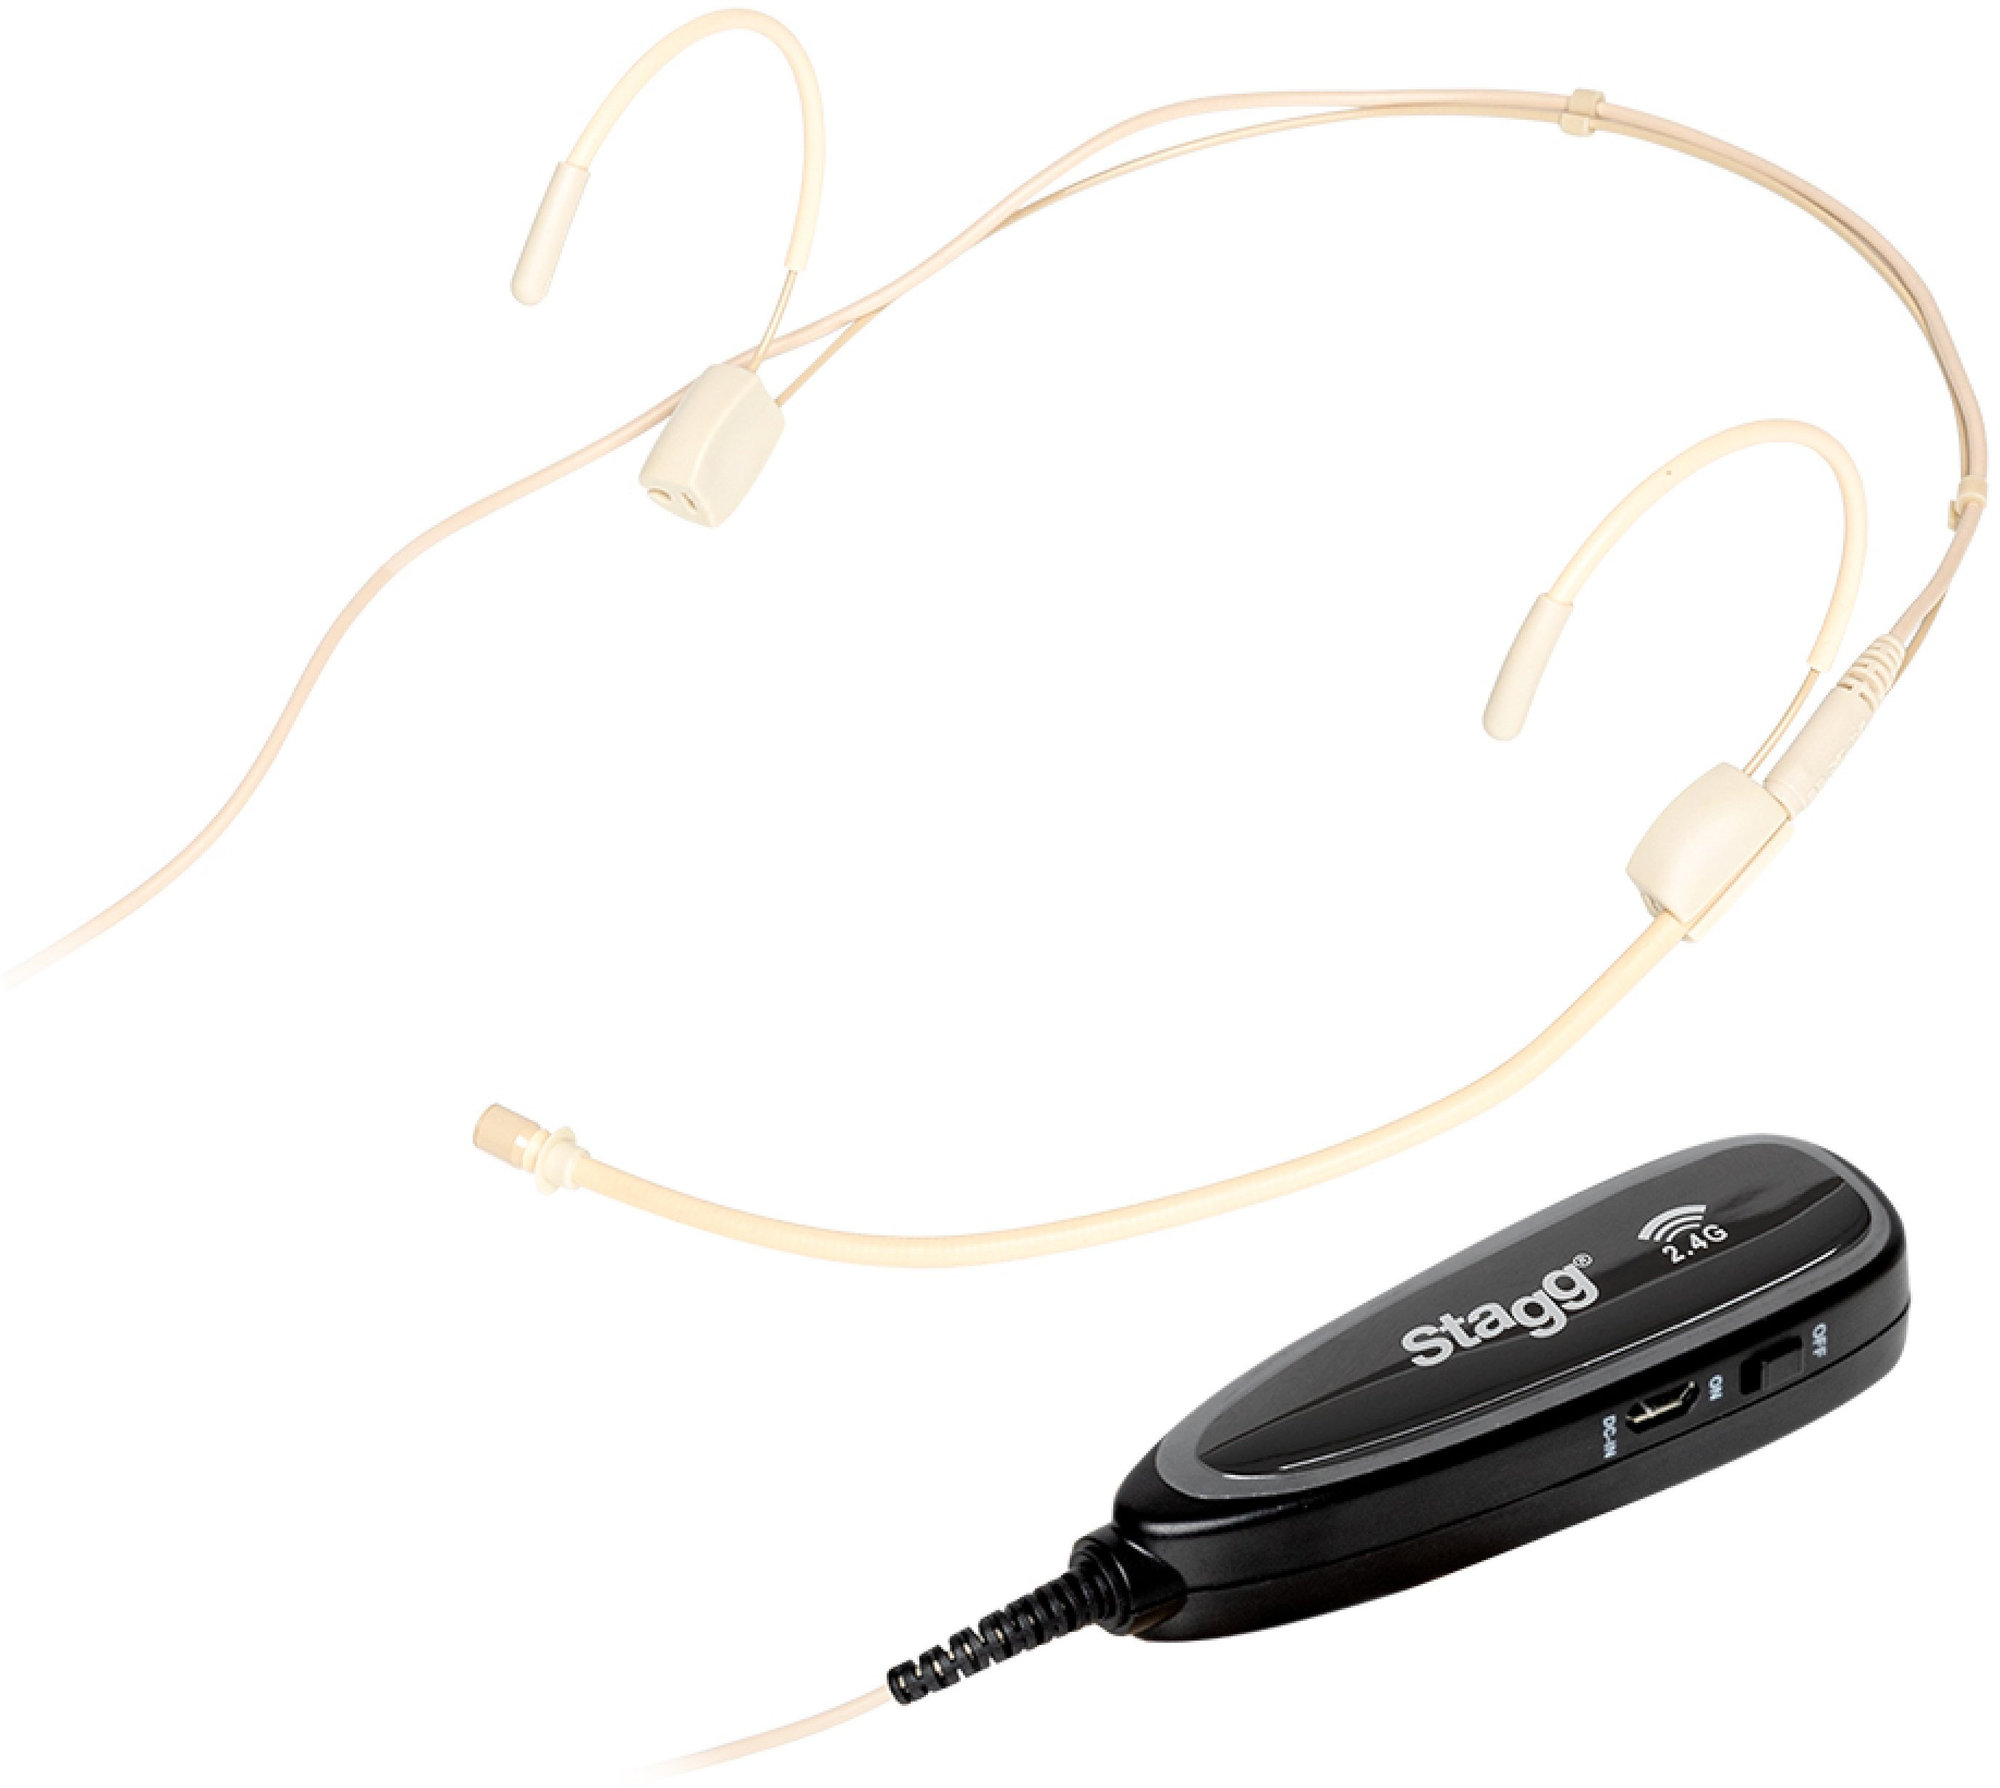 Stagg SUW 12H-BE UHF Beige Wireless Headset (2.4 GHz) Wireless Microphone Headsets